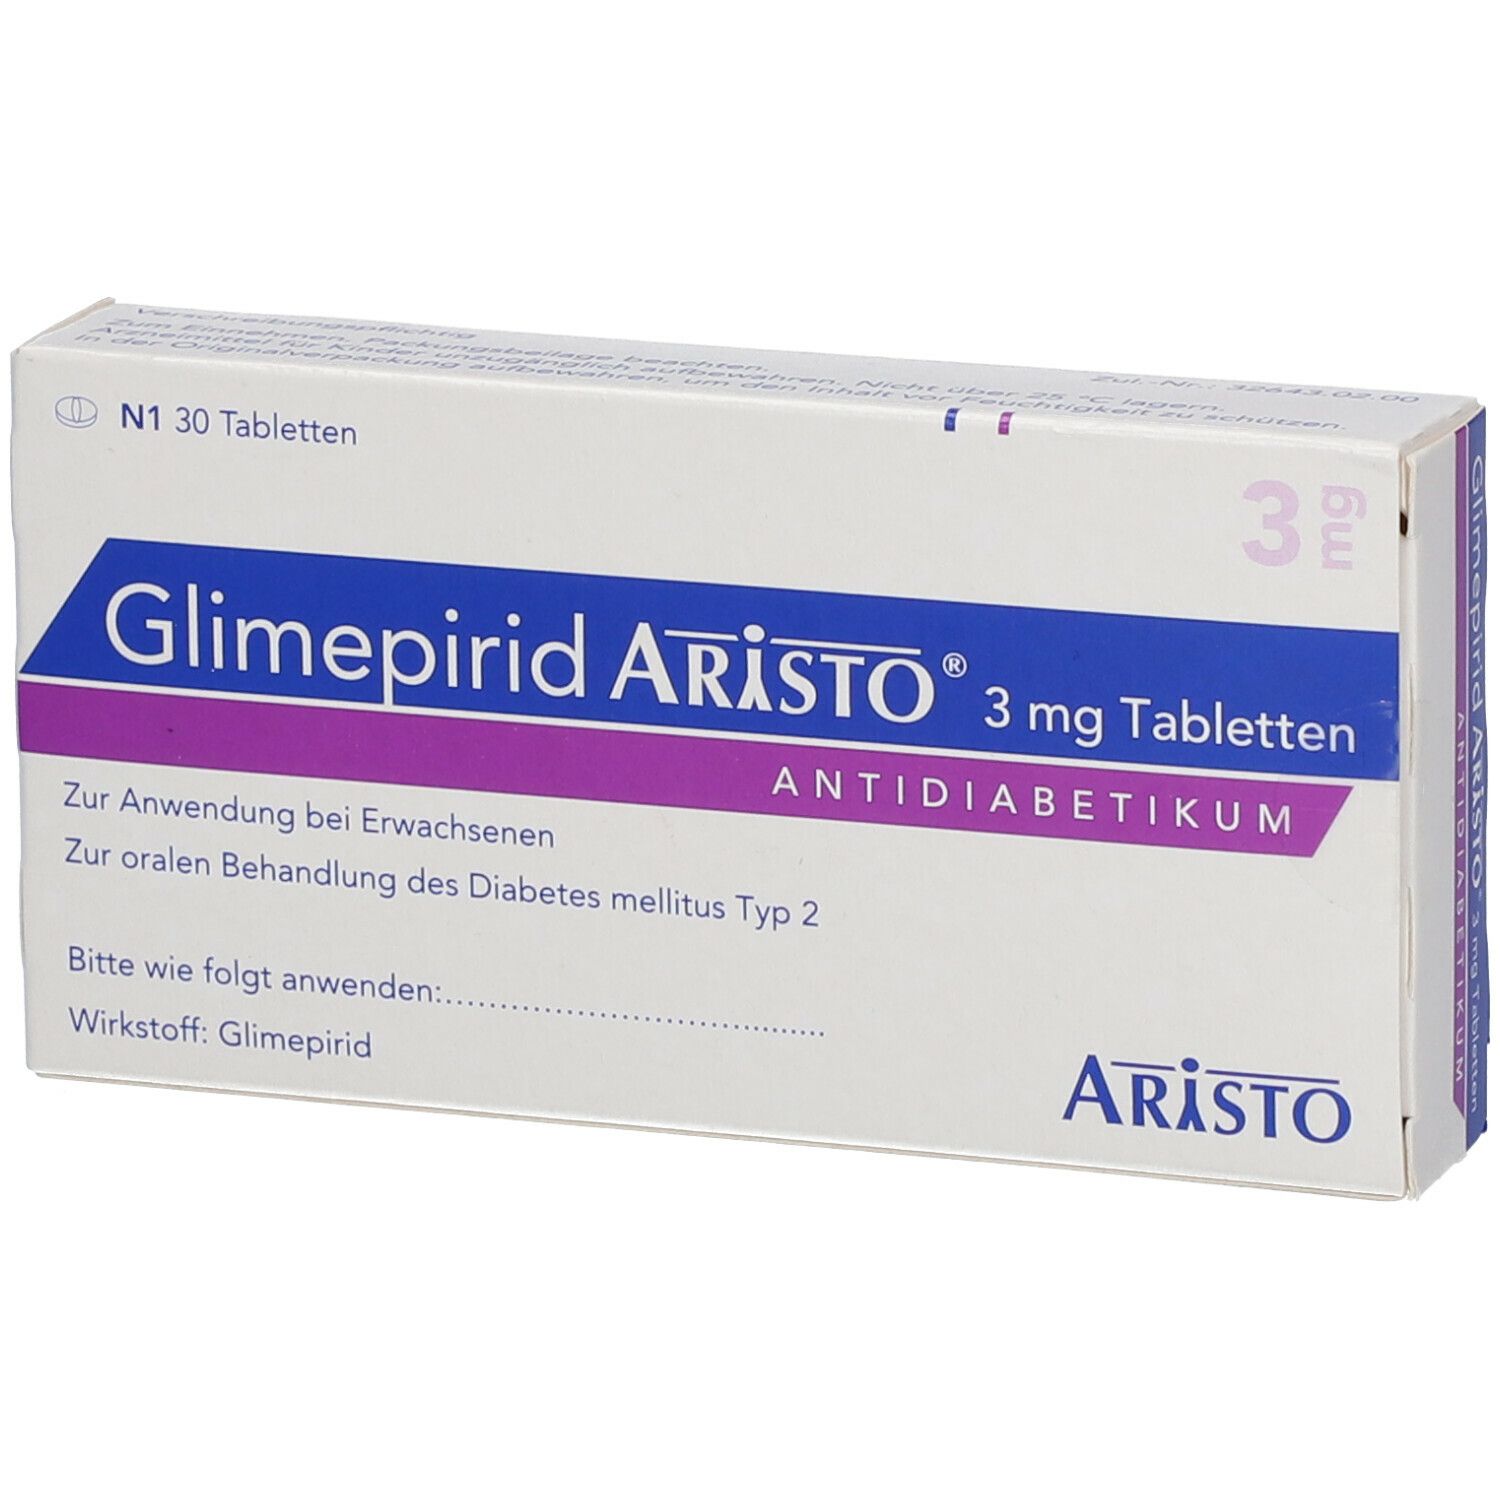 Glimepirid Aristo® 3 mg